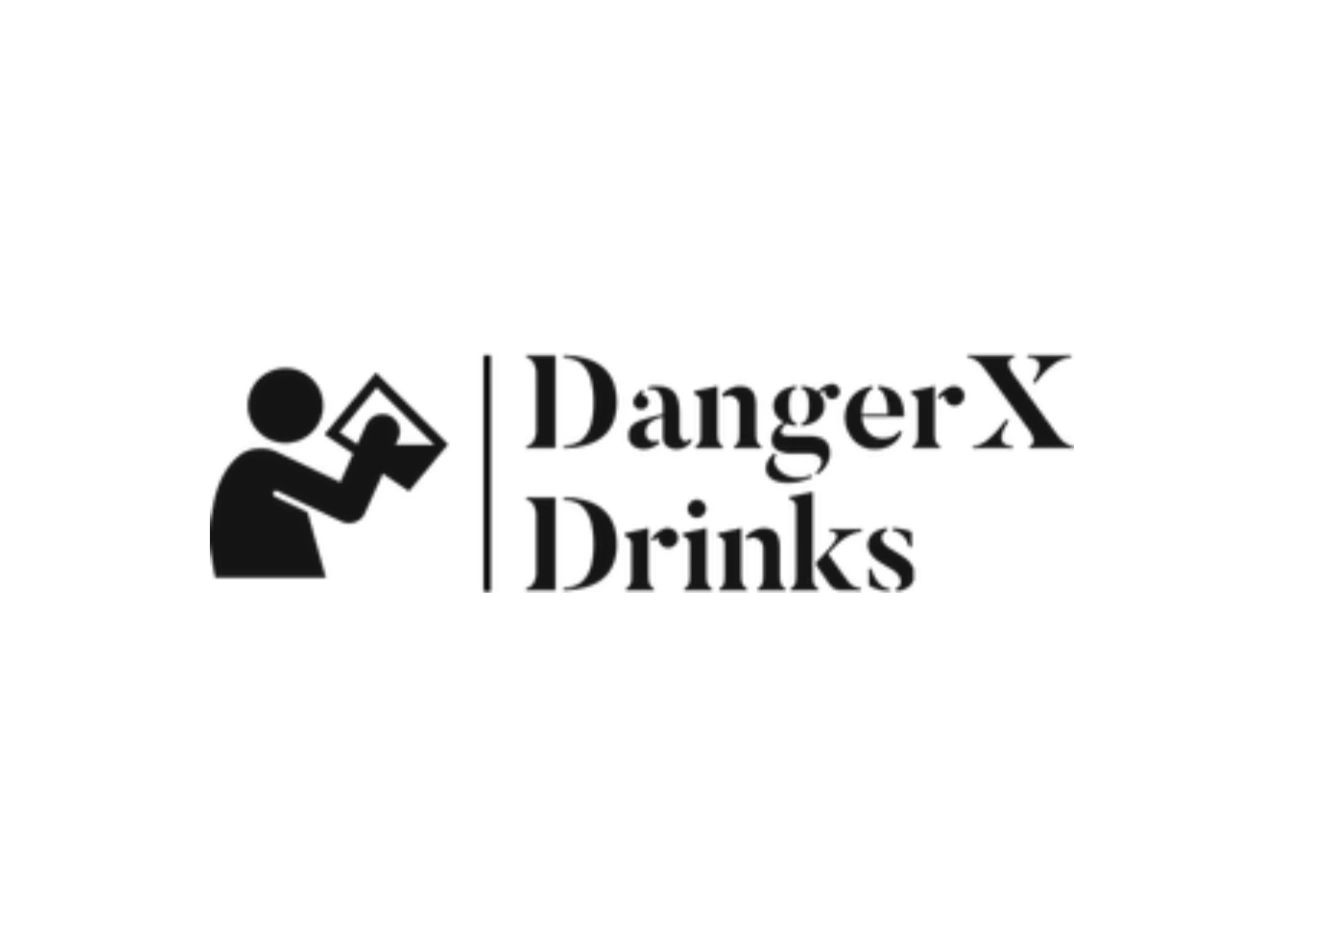 Alcohol
Drinks
Consulting
DangerX
DangerX Drinks